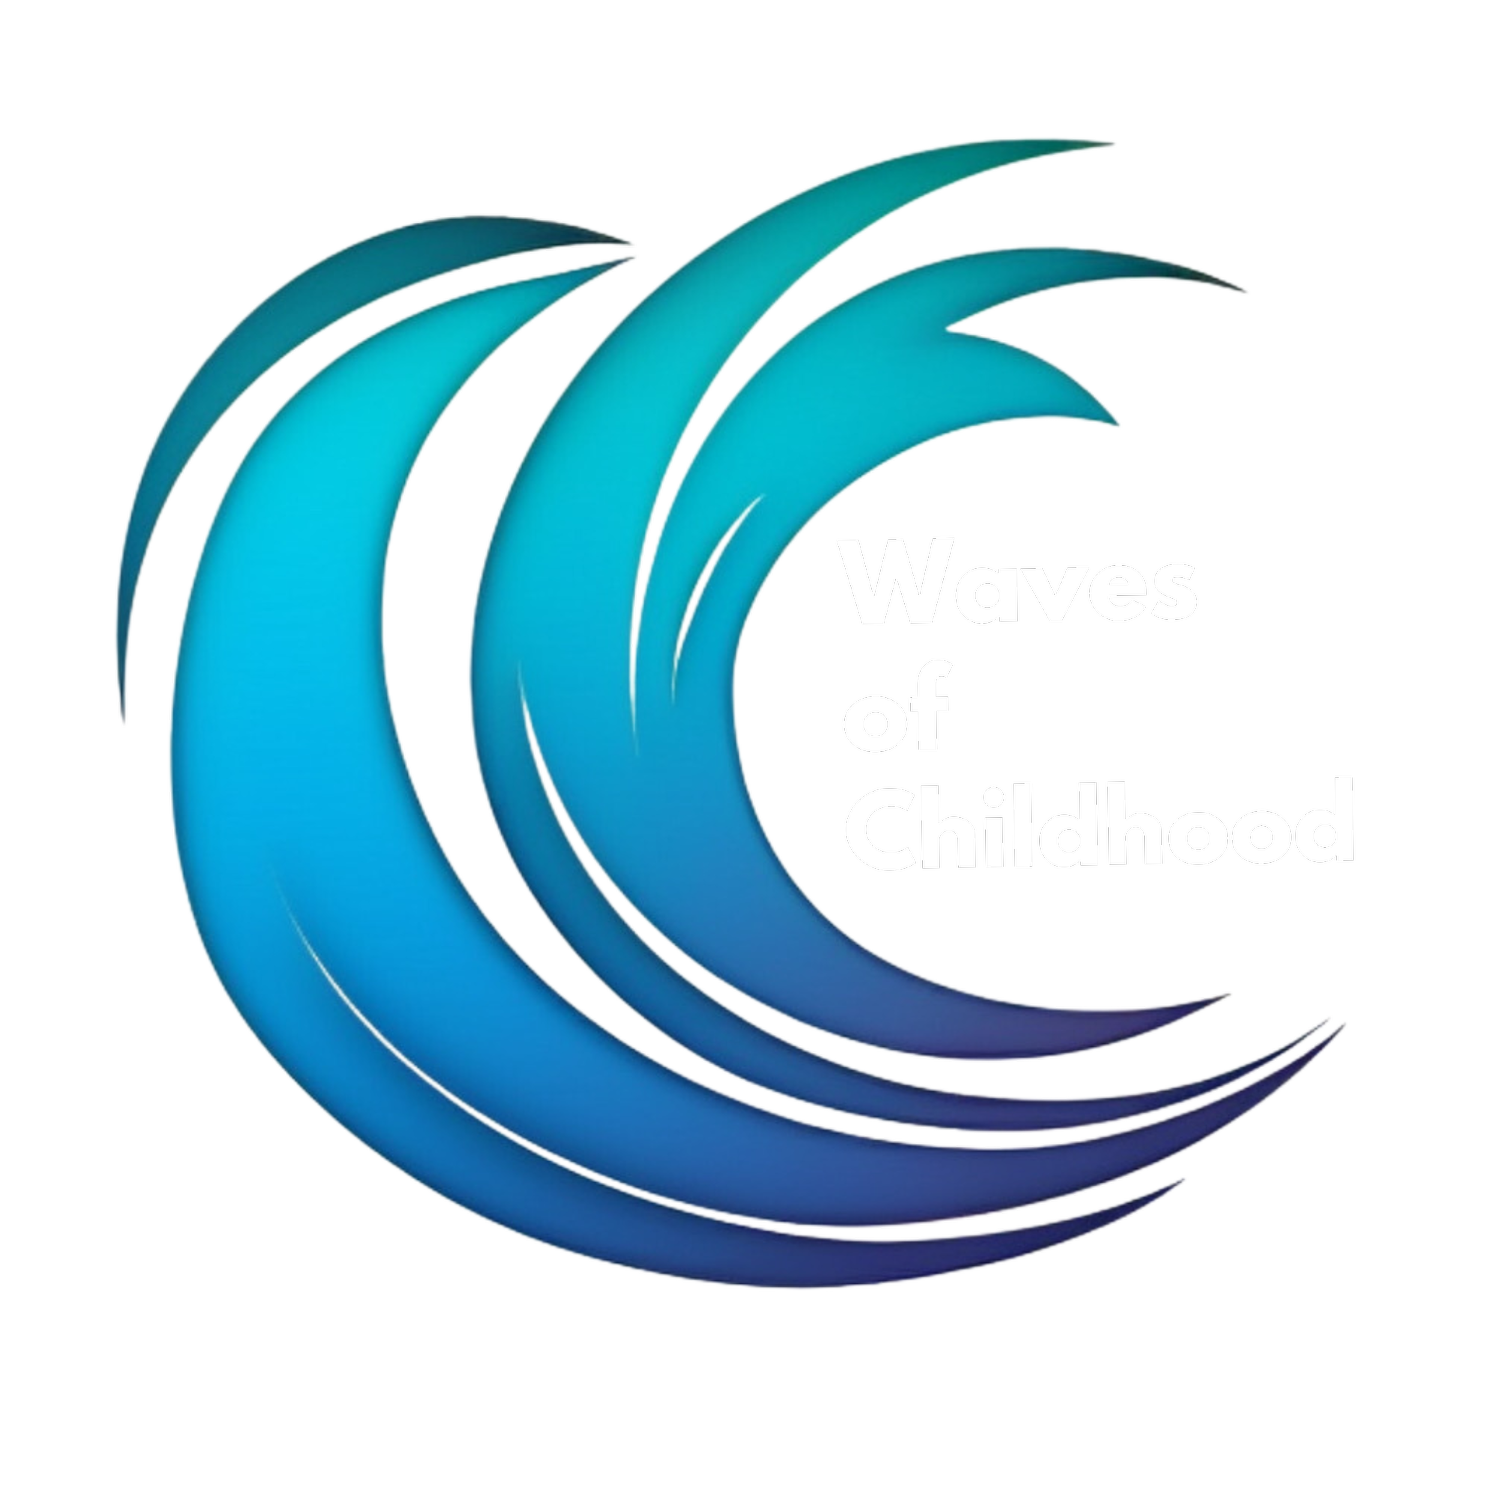 Waves of Childhood